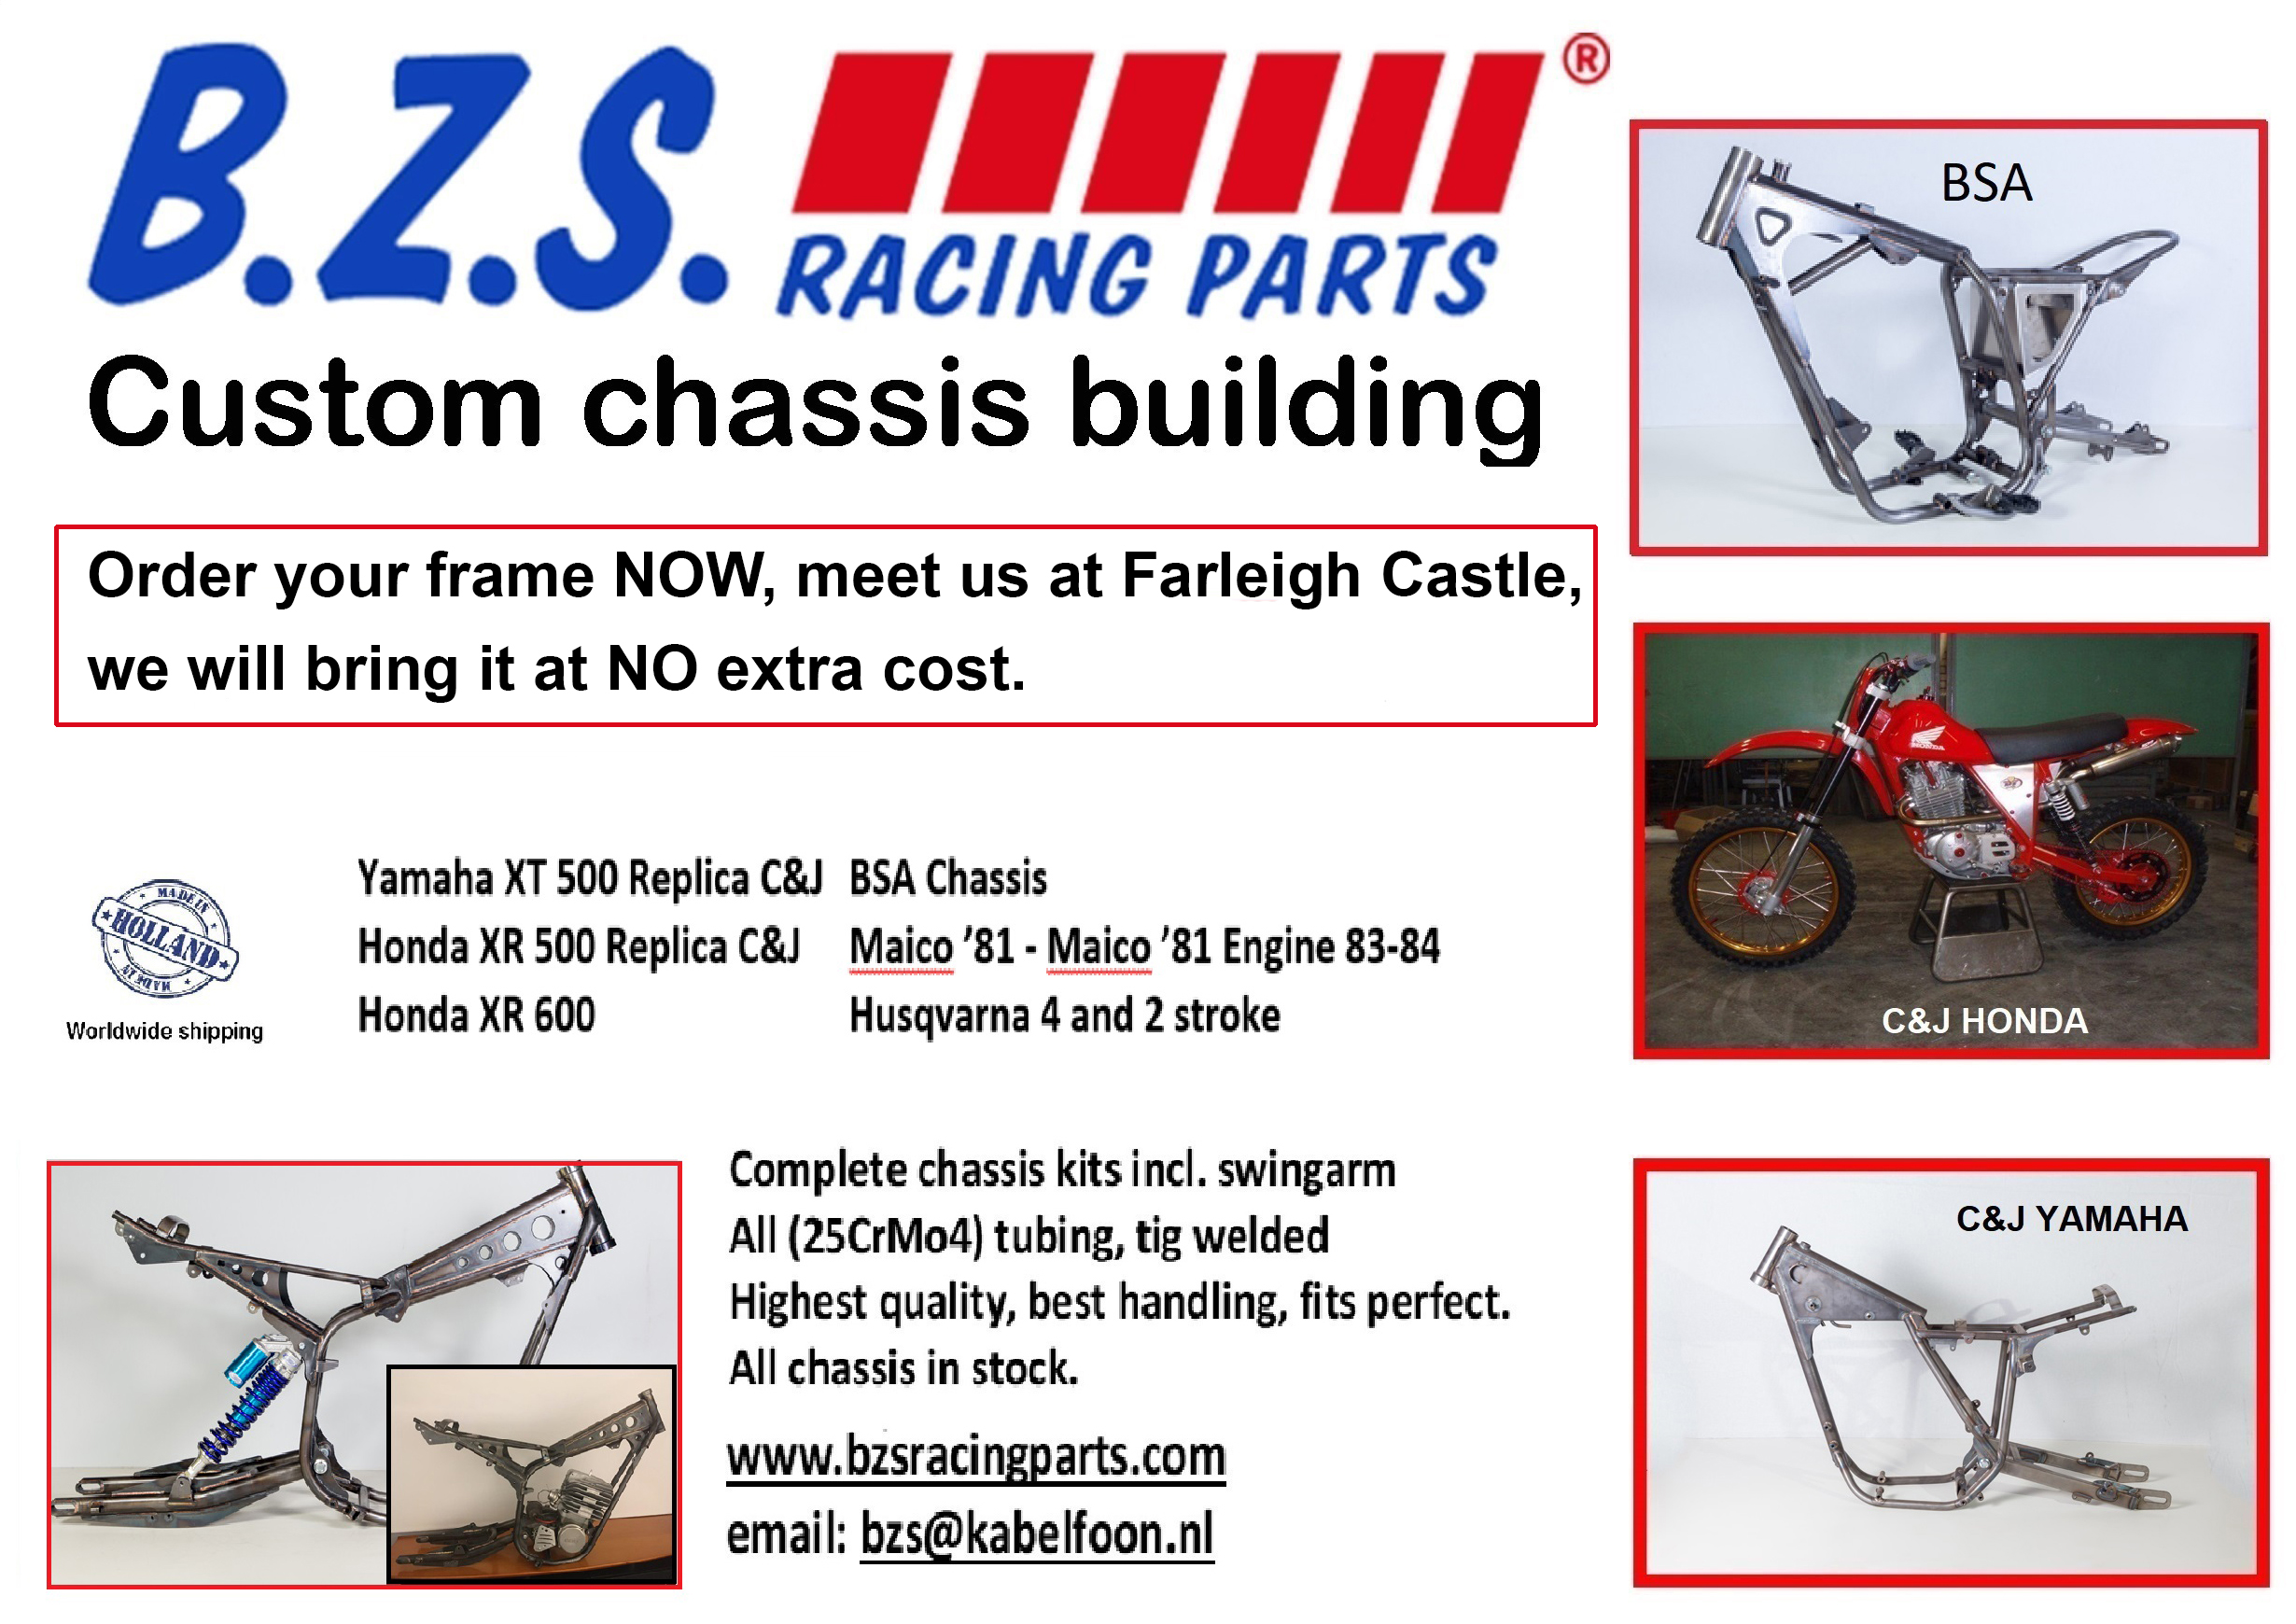 BZS RacingParts custom chasis building